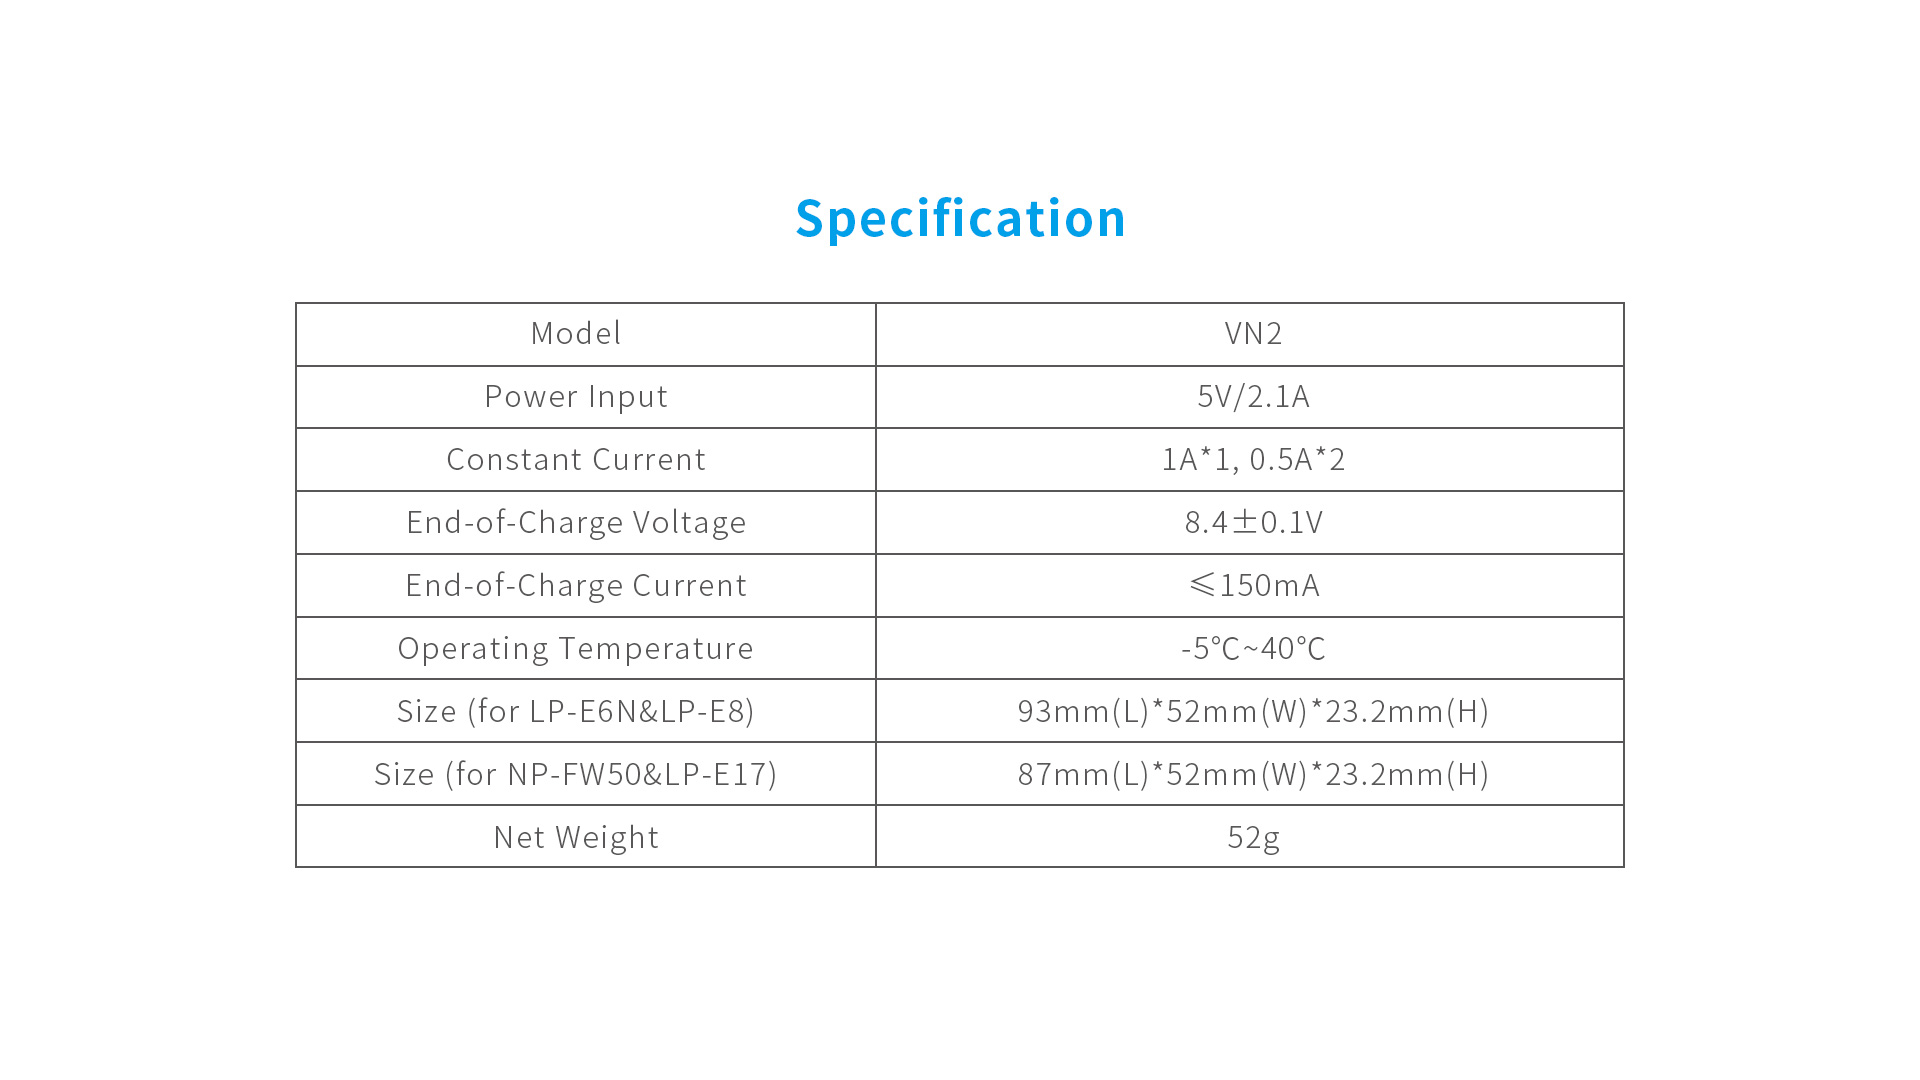 XTAR VN2 Akkumulátor Töltő Sony NP-FW50 Akkumulátorhoz